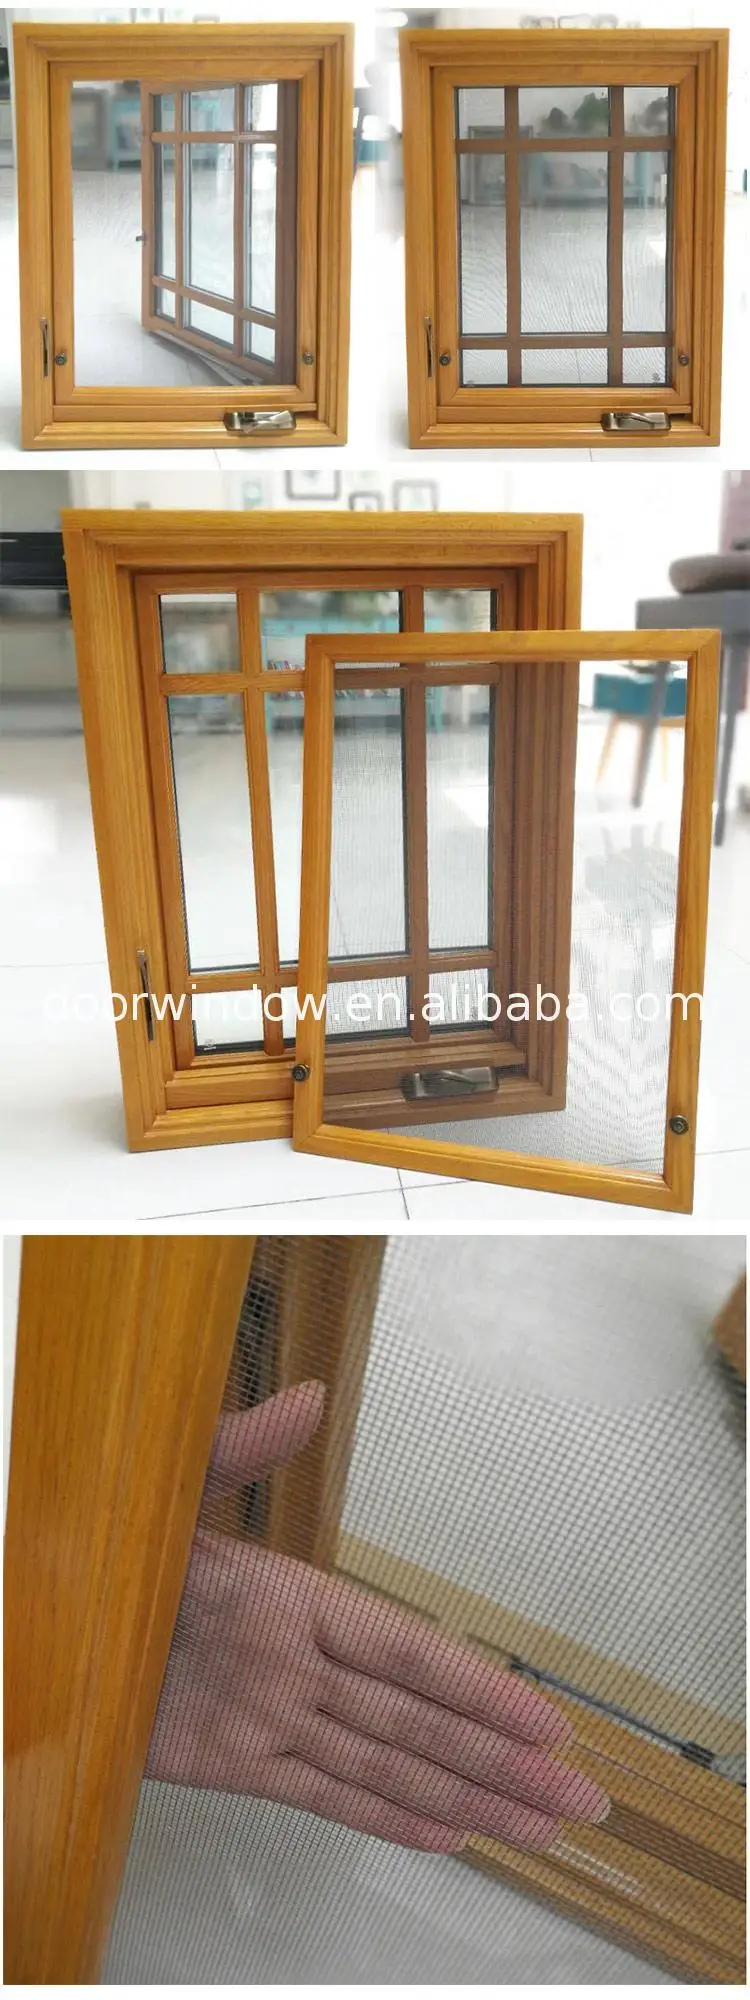 Factory direct price grill design for door and window aluminum casement front